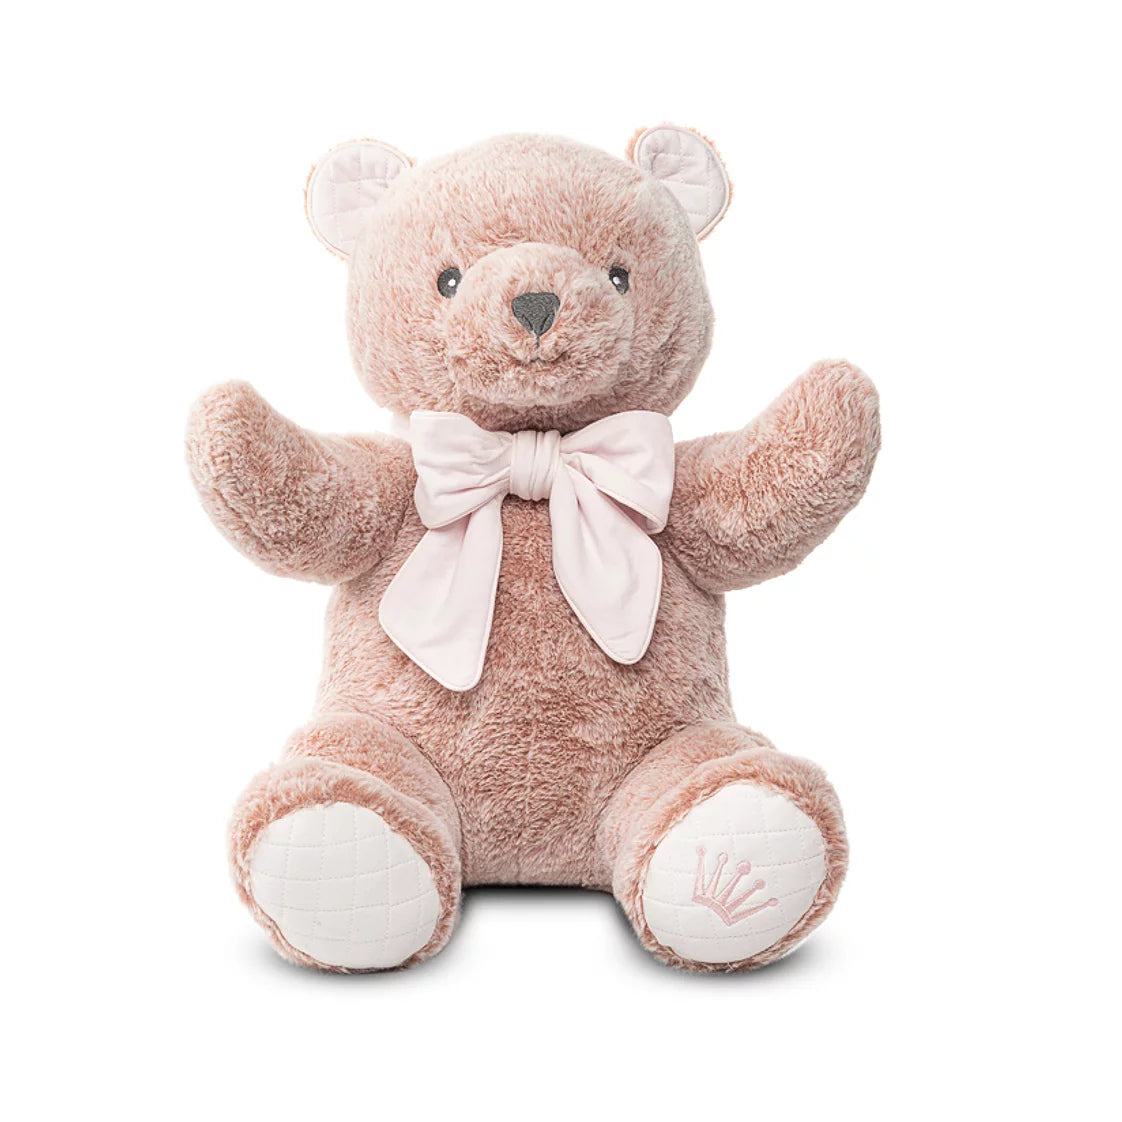 First New Pretty Pink Zoe Fur Teddy Bear